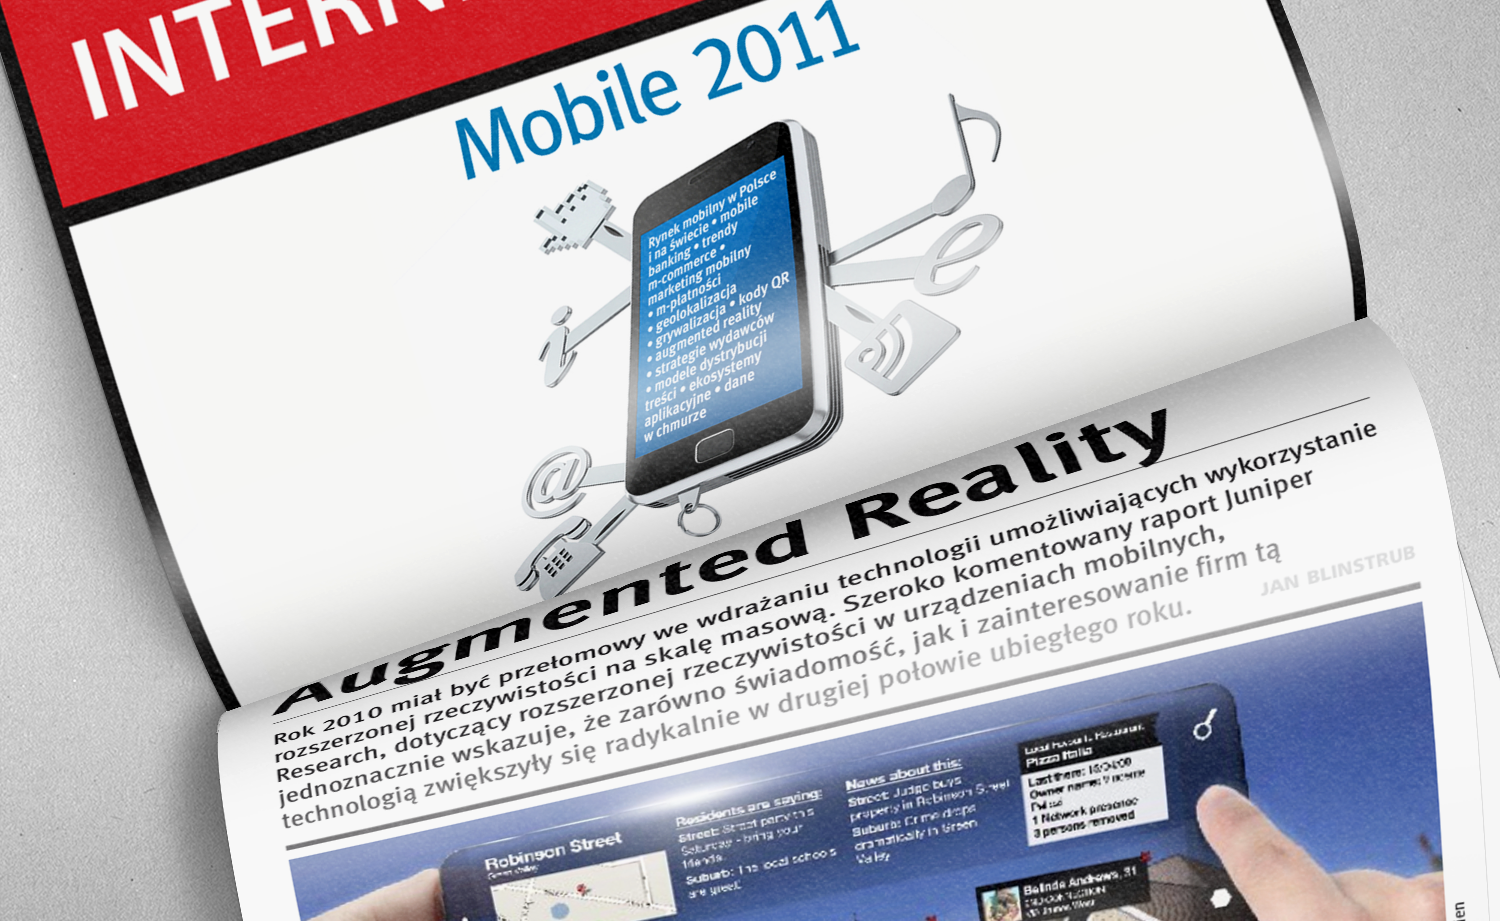 Raport Mobile 2011 w Internet Standard